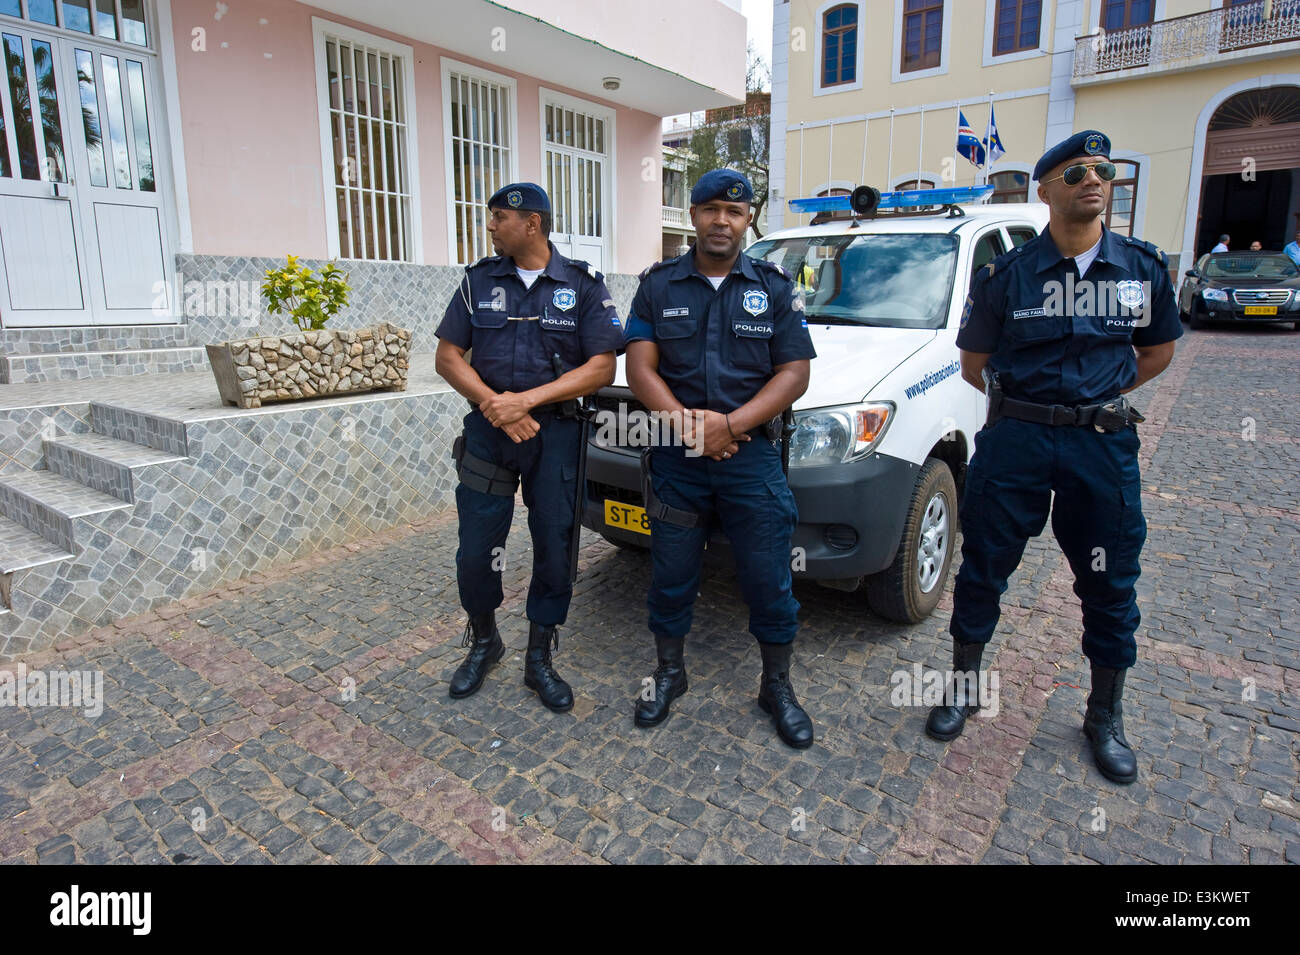 Polizisten vor dem Rathaus in Mindelo, Sao Vicente Island, Kap Verde  Stockfotografie - Alamy